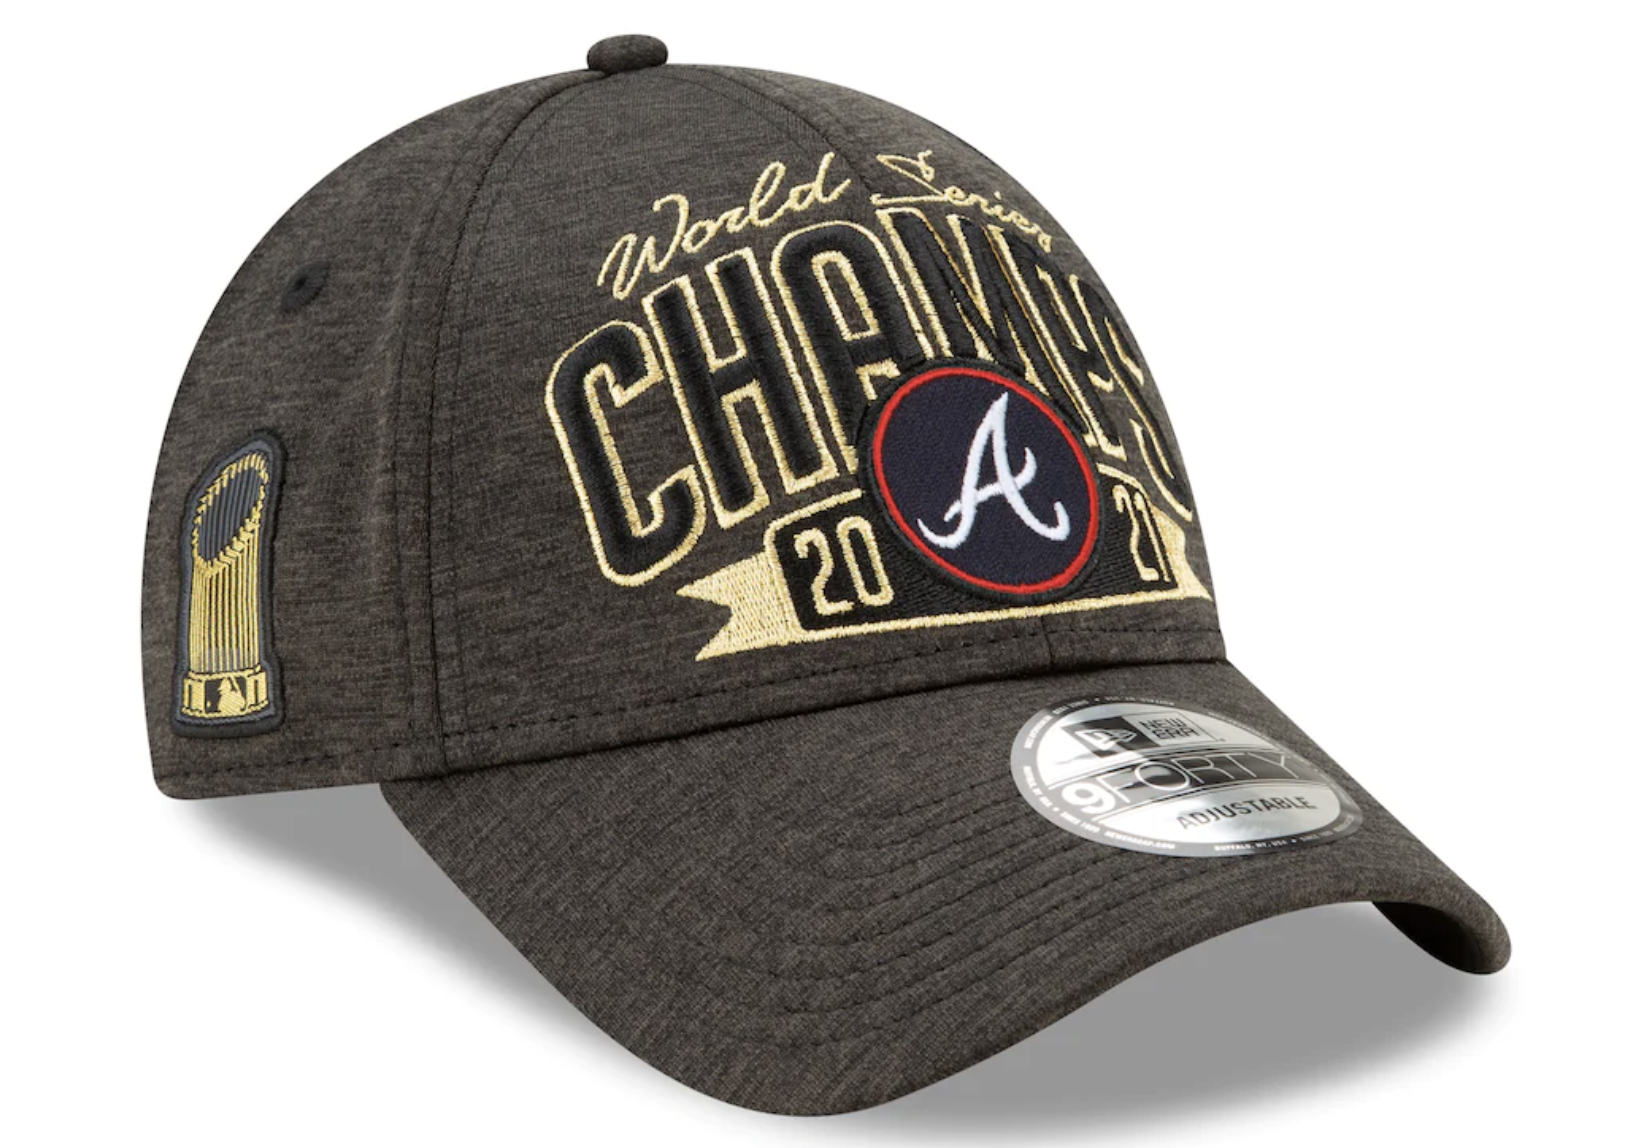 Atlanta Braves World Series 2021 Championship Gear: Where to buy hats, T- shirts, hoodie sweatshirts and more 